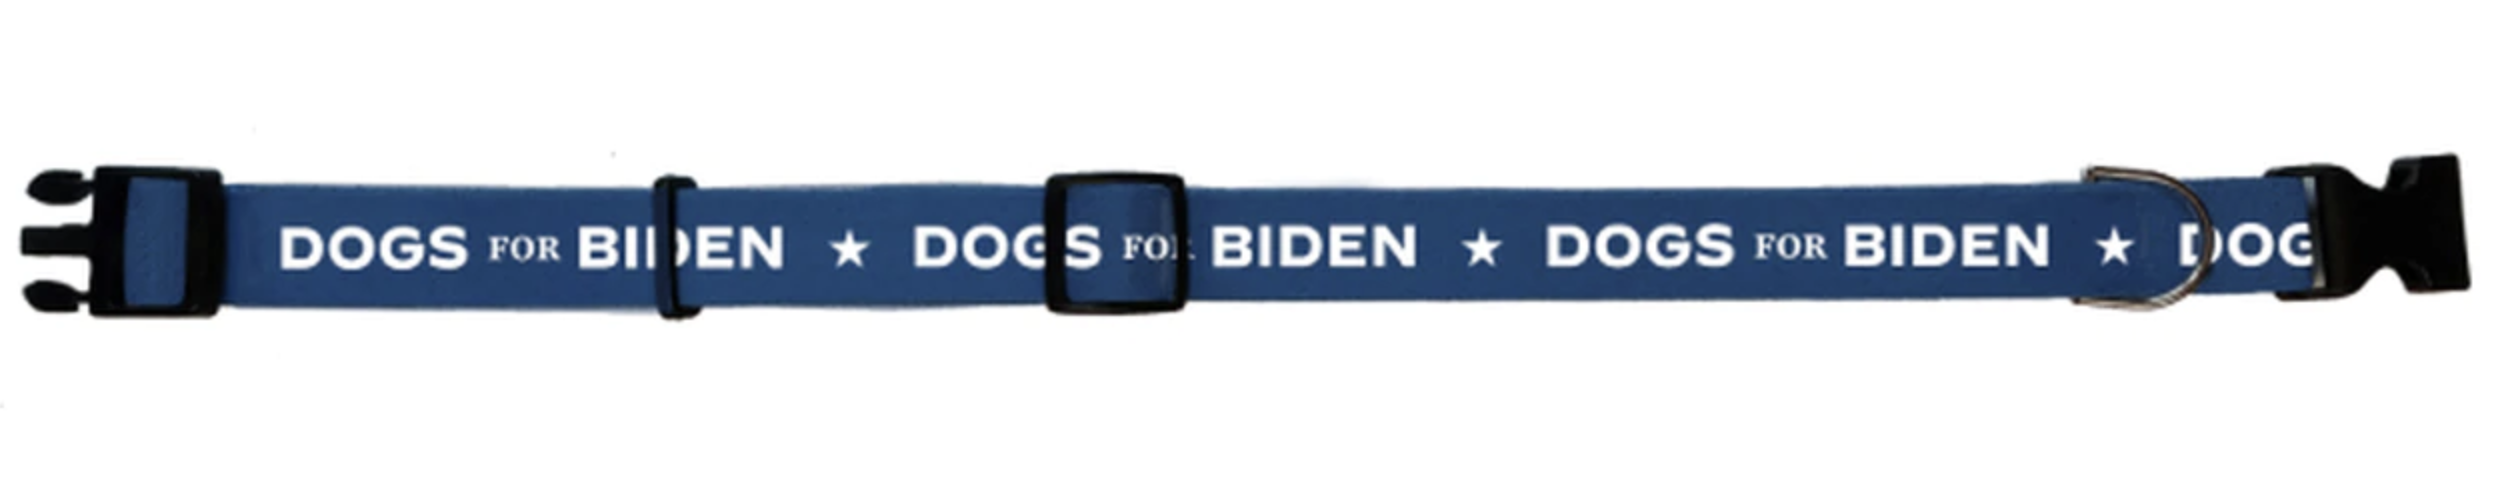 Dogs for Biden dog collar.